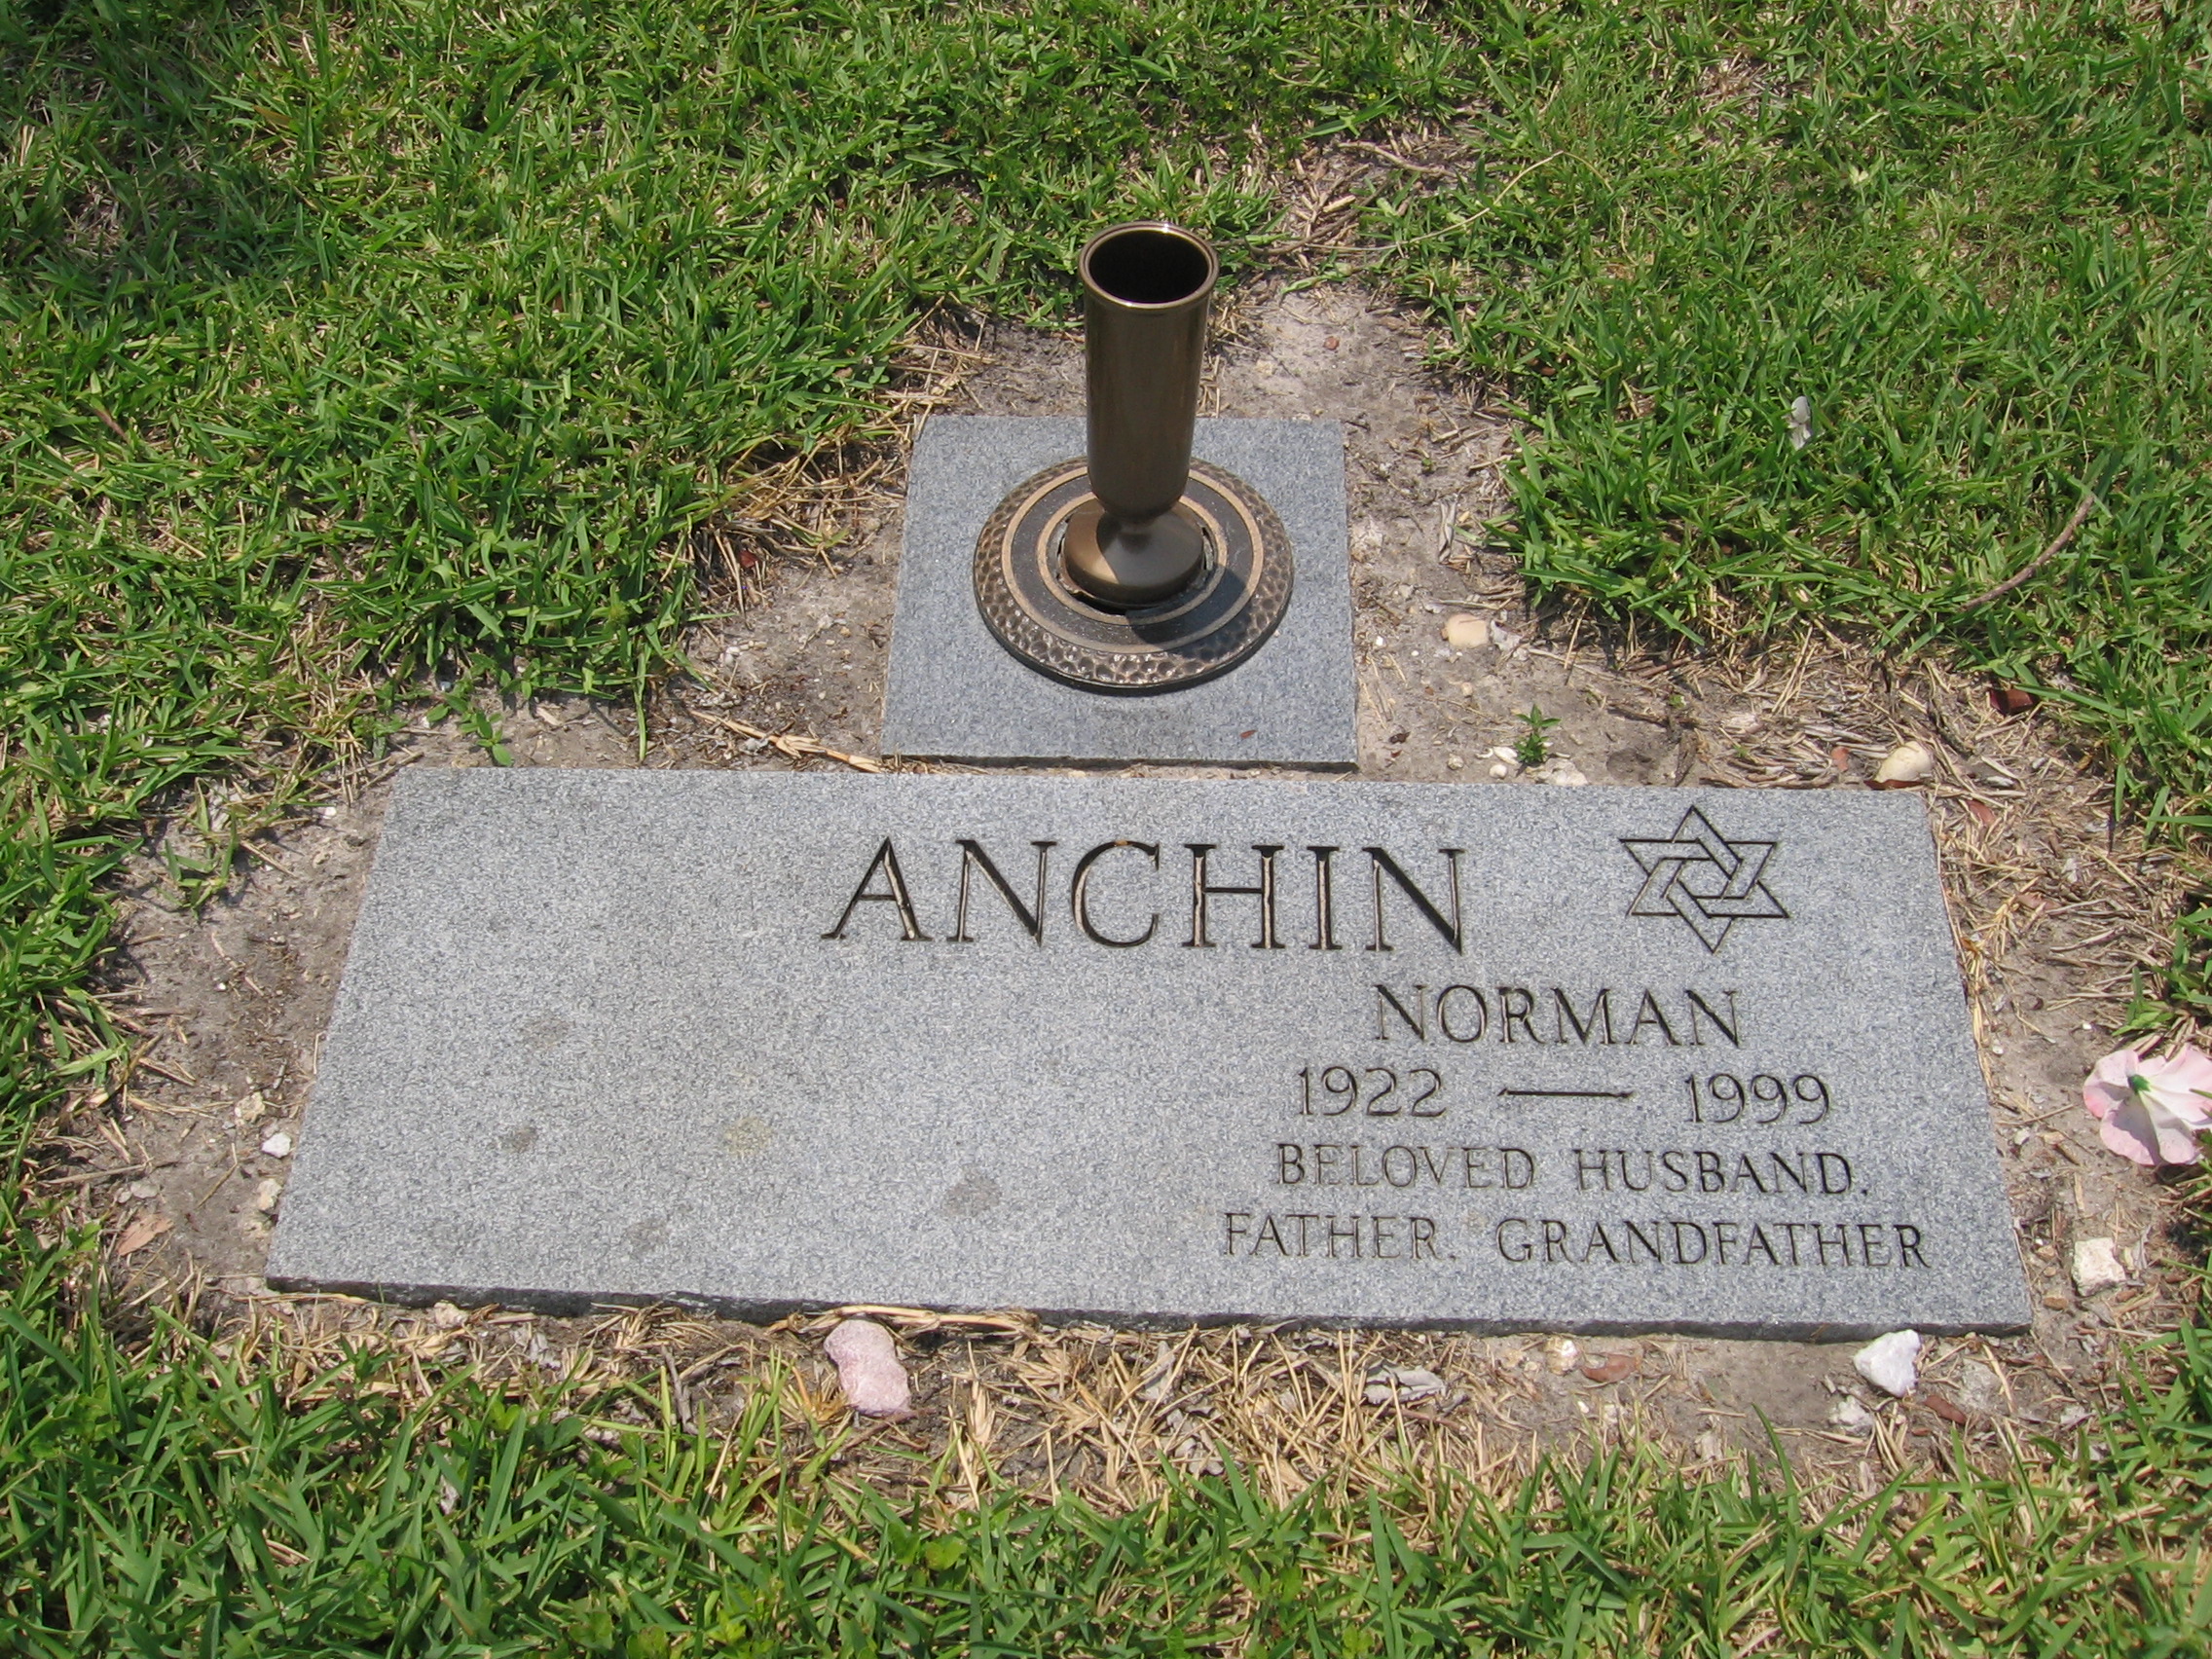 Norman Anchin